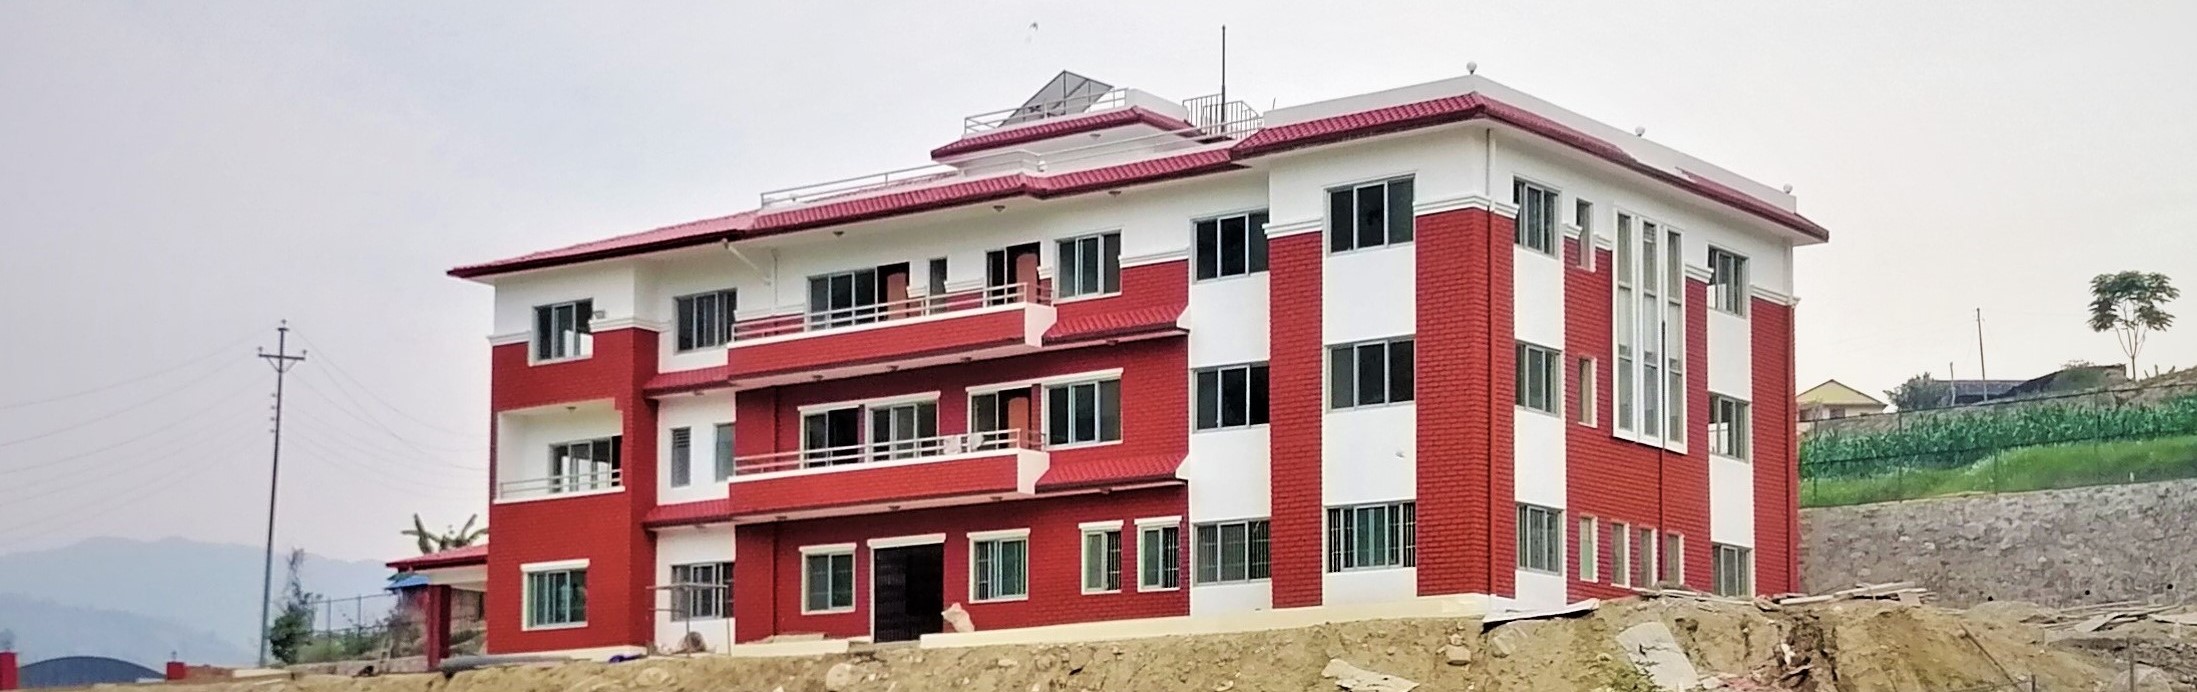 building of shivapuri rural municipality